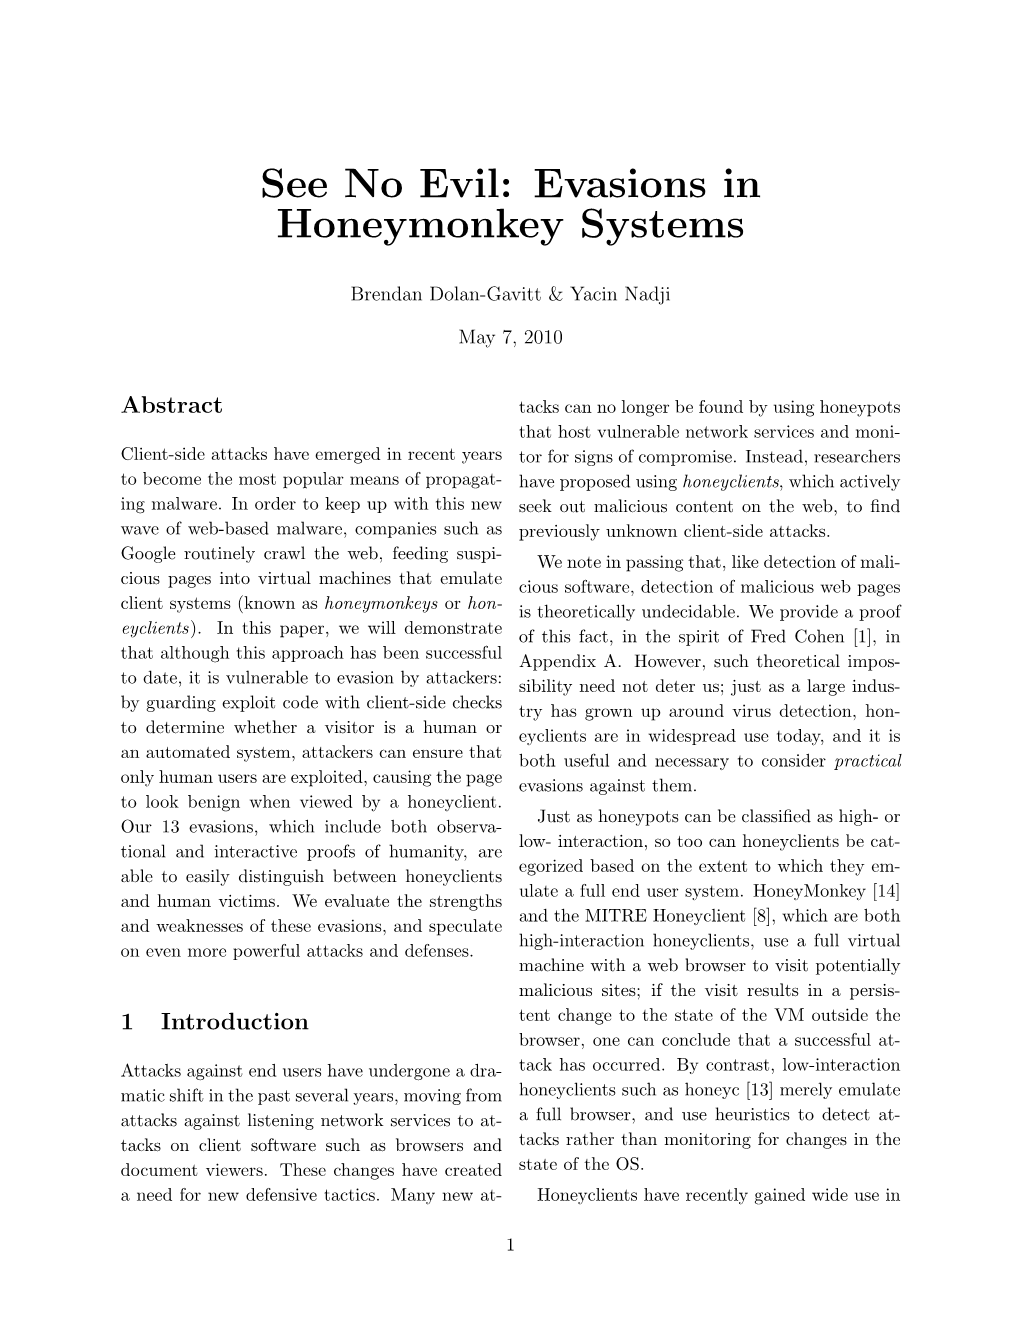 See No Evil: Evasions in Honeymonkey Systems